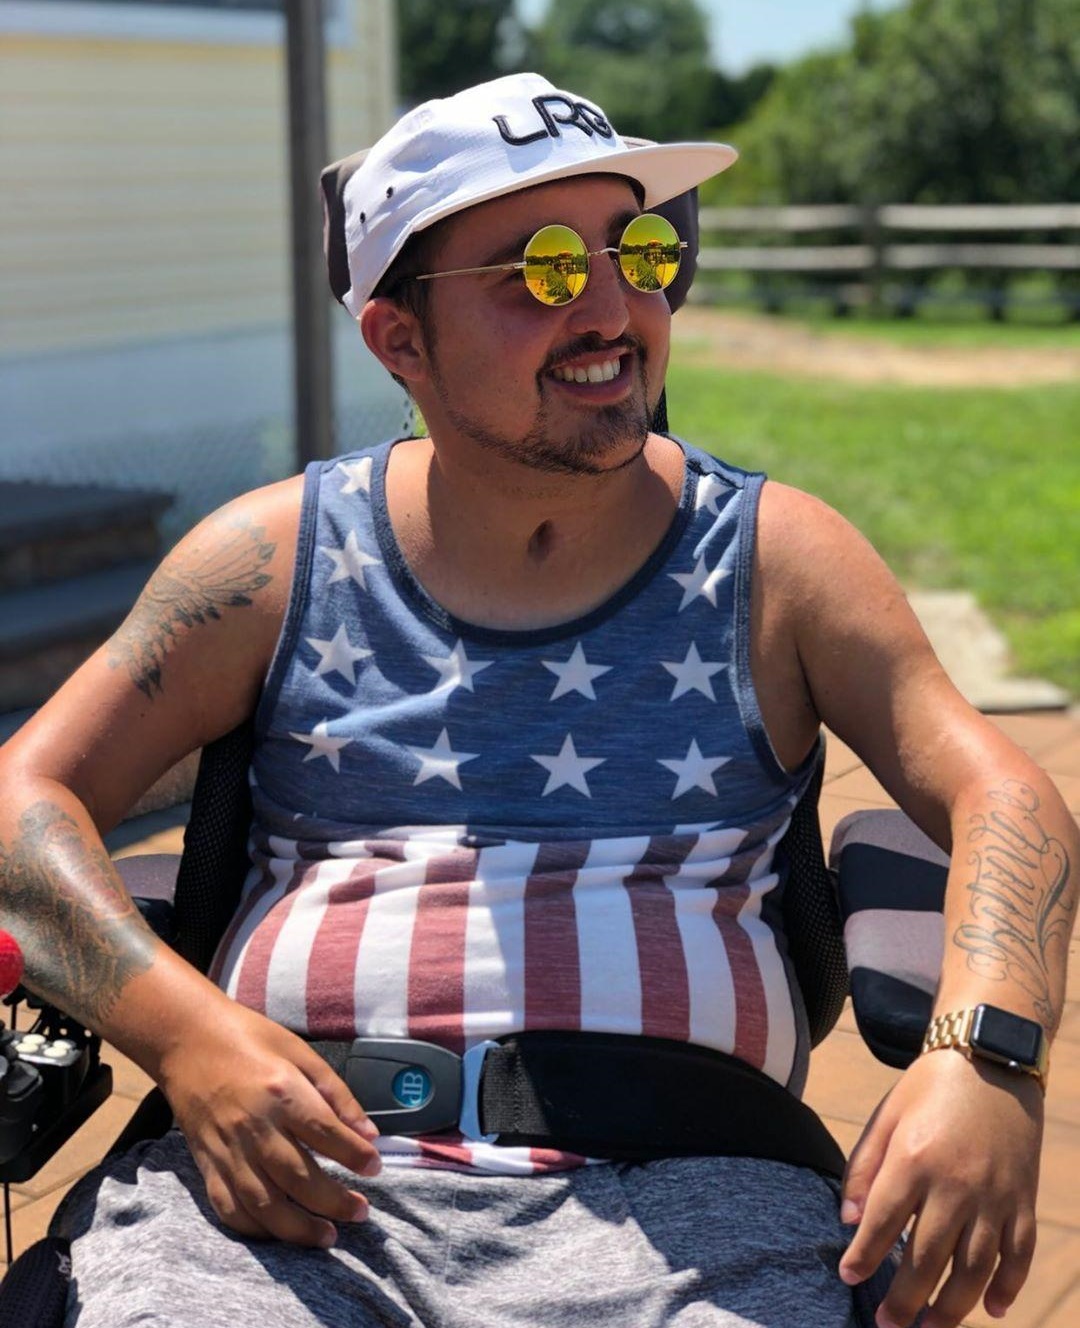 voting: smiling, tan, tattooed man wearing sunglasses, ballcap, flag tank top in wheelchair